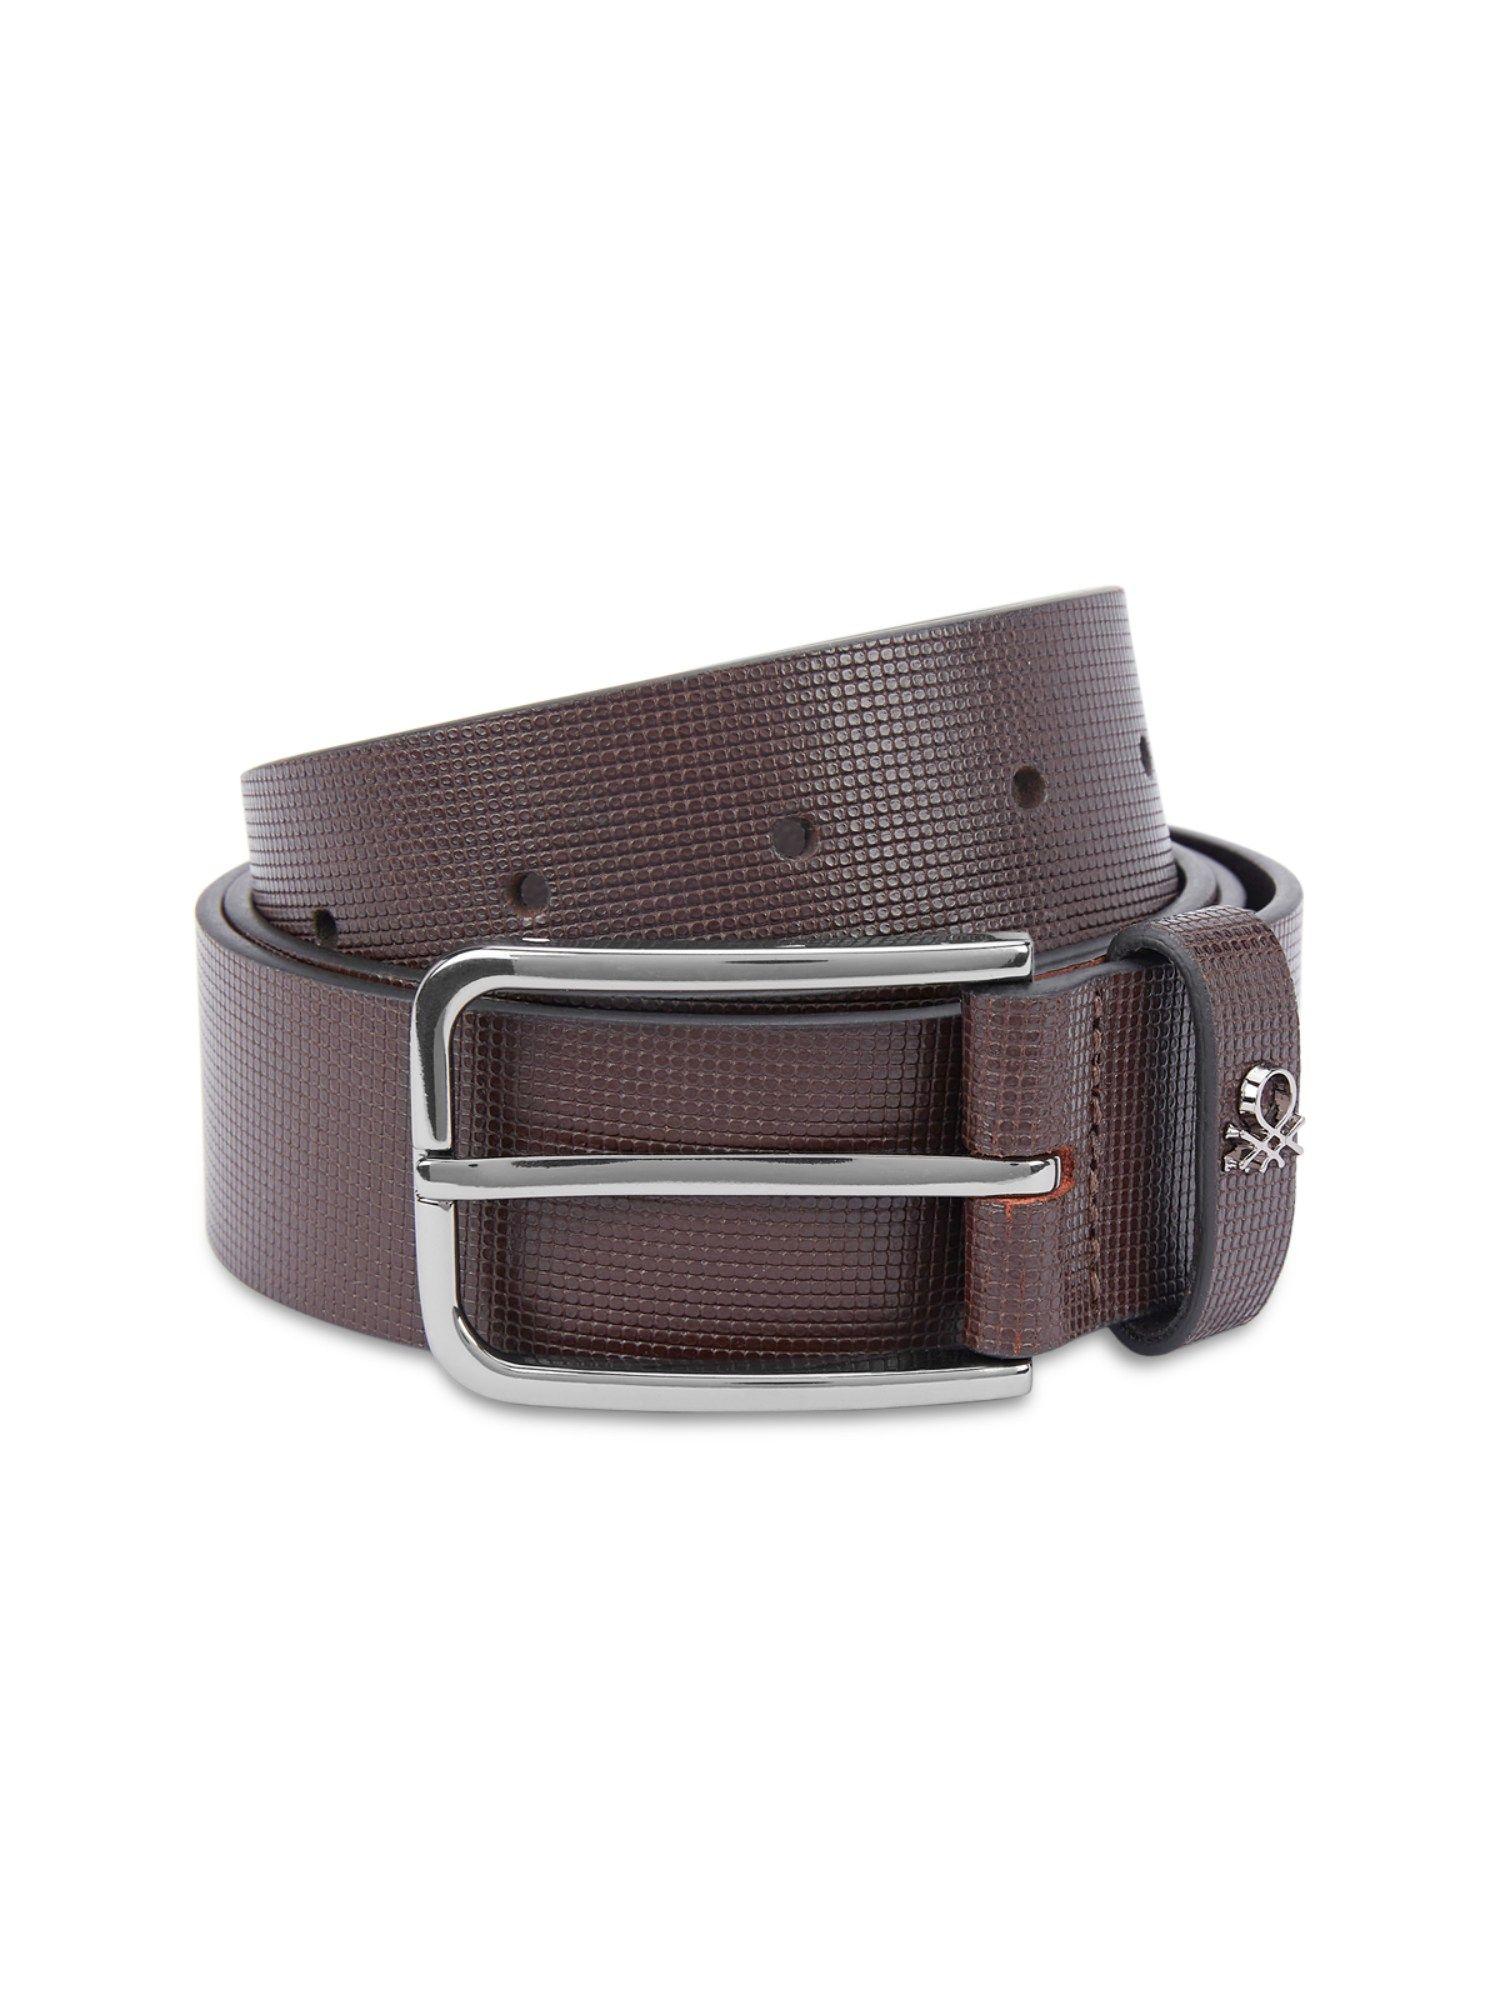 adriano men leather belt - brown